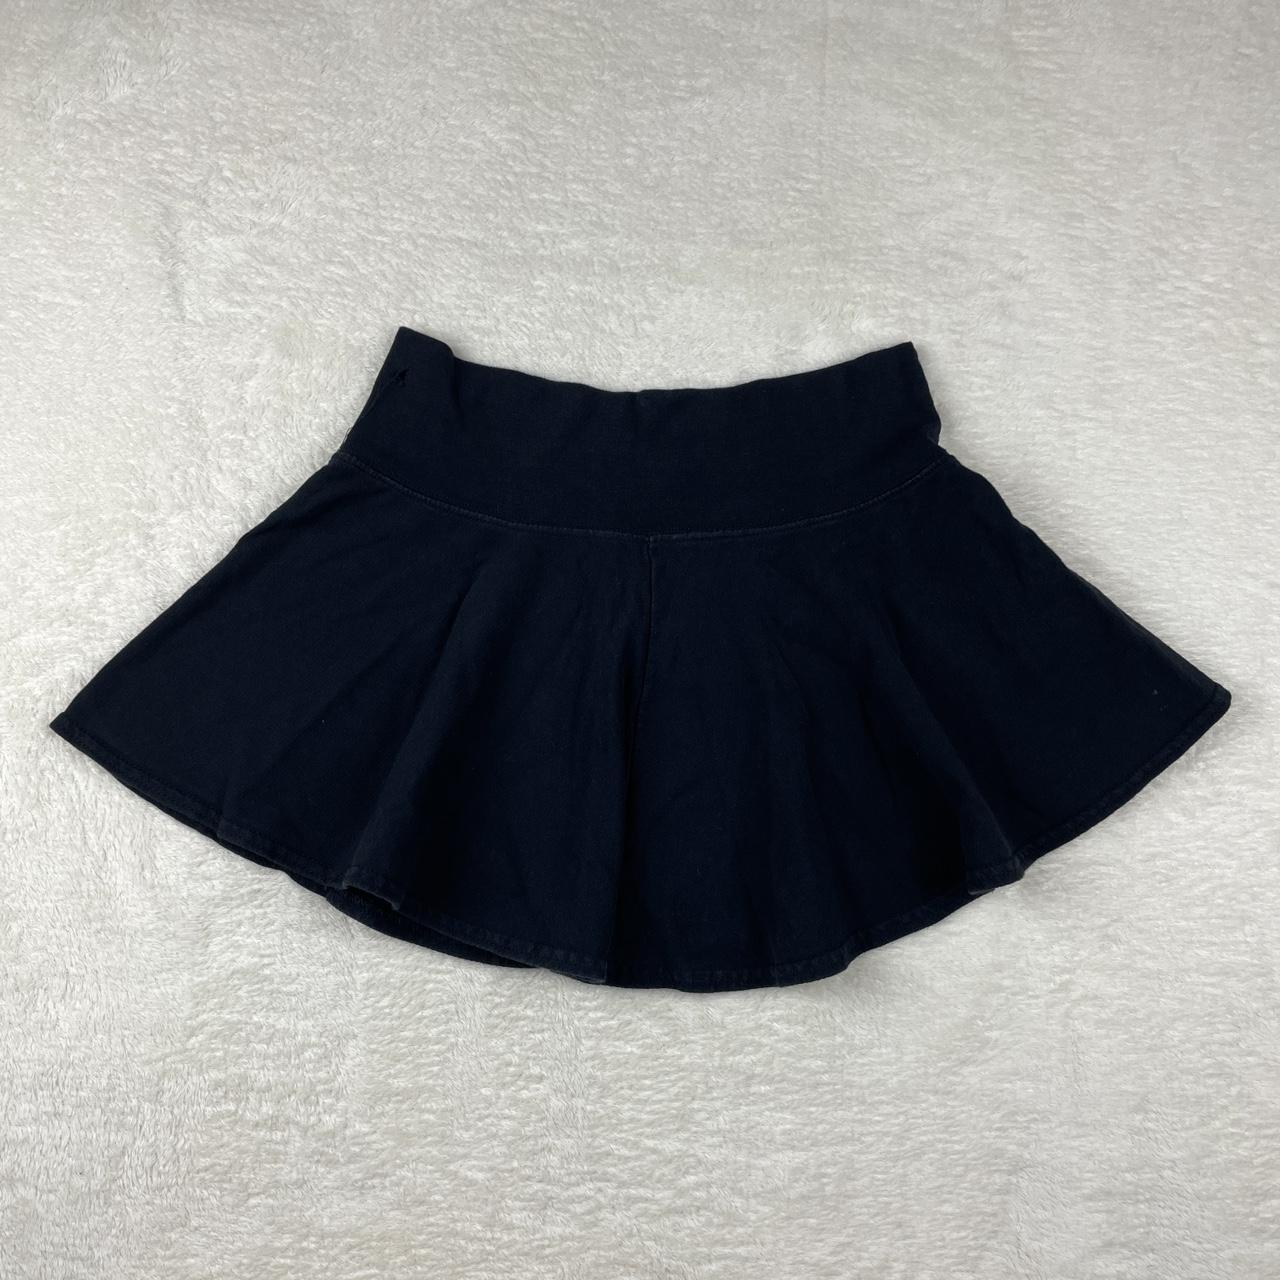 vintage micro mini skirt black low rise micro... - Depop